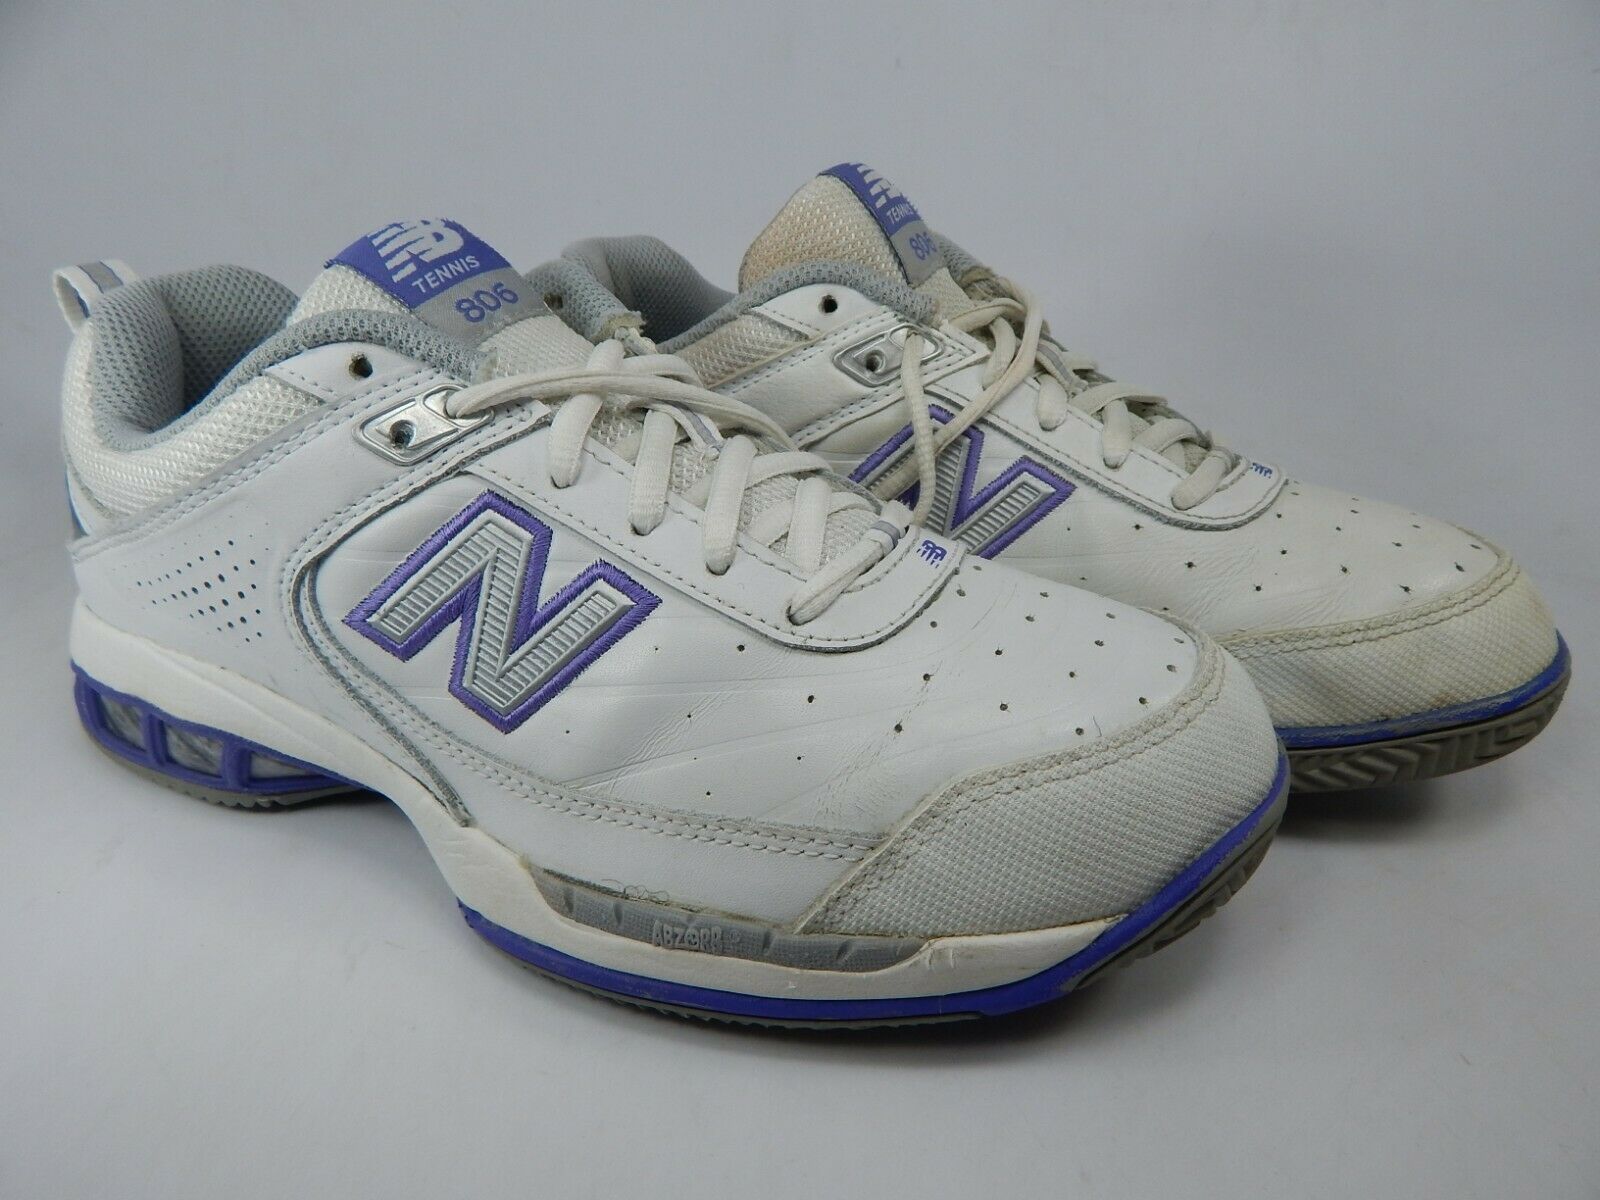 New Balance 806 Size US 9.5 M (B) EU 41 Women's Tennis Court Shoes ...